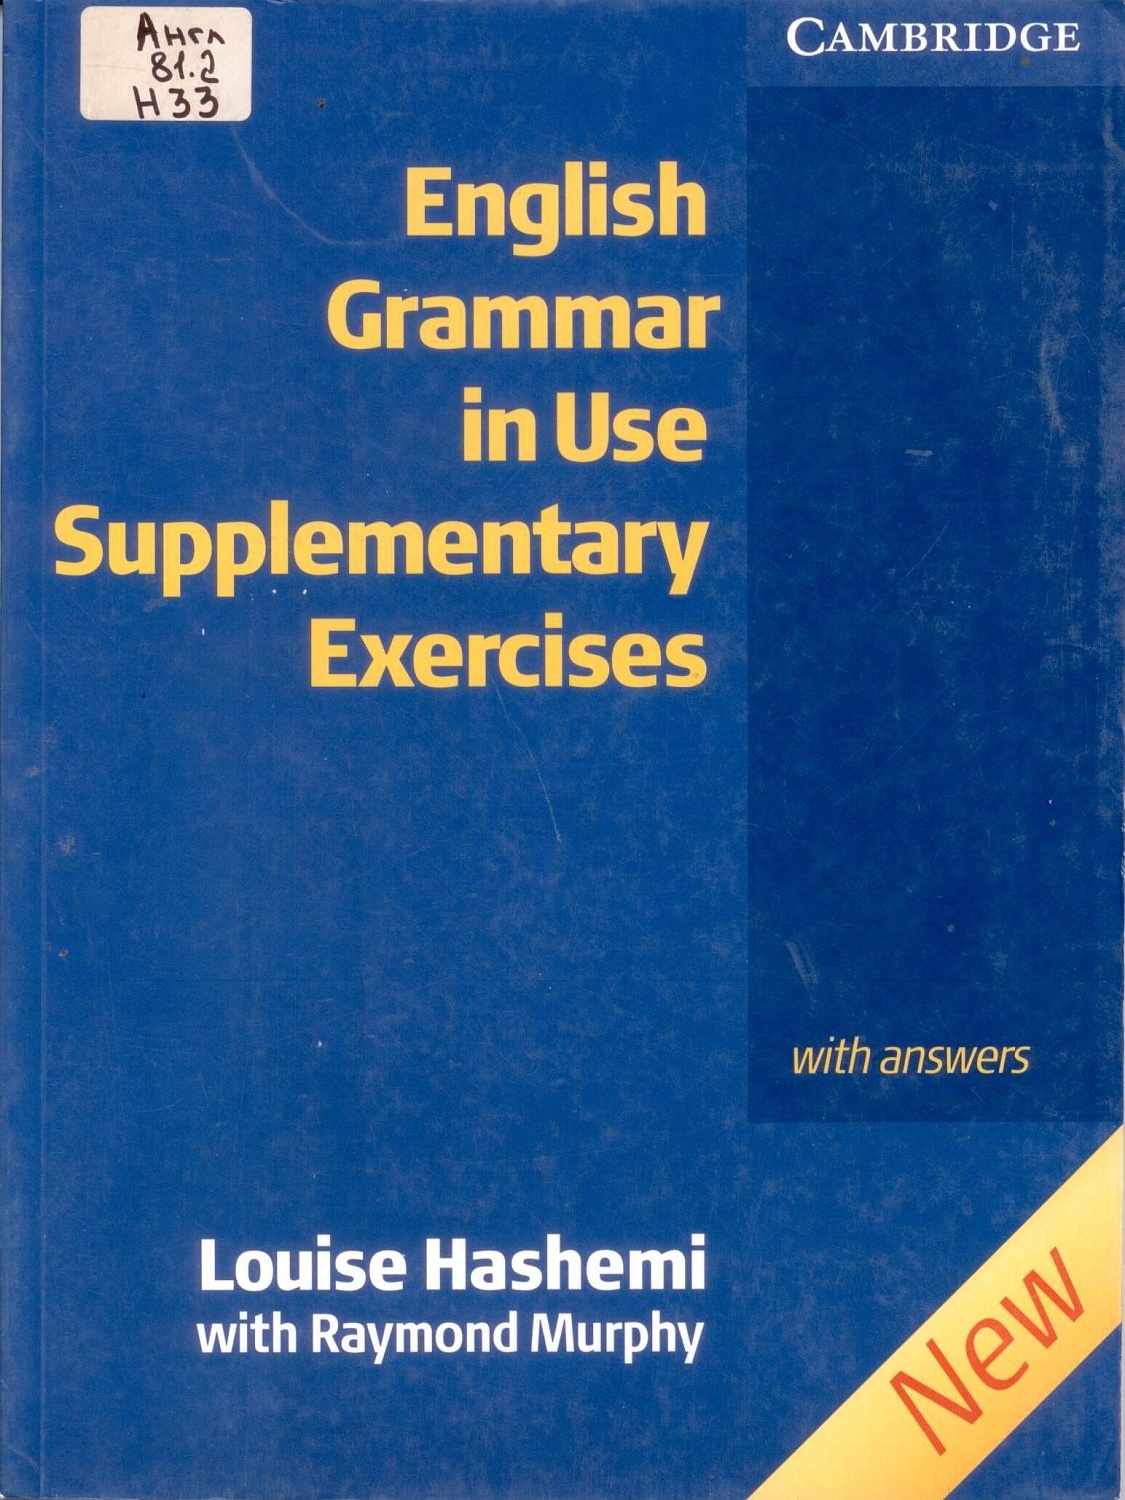 Англ 81.2 H 33 English Grammar in Use Supplementary Exercises with Answers / Louise Hashemi, Raymond Murphy. – Cambridge: Cambridge University Press, 2006. – 136 p.: ill.